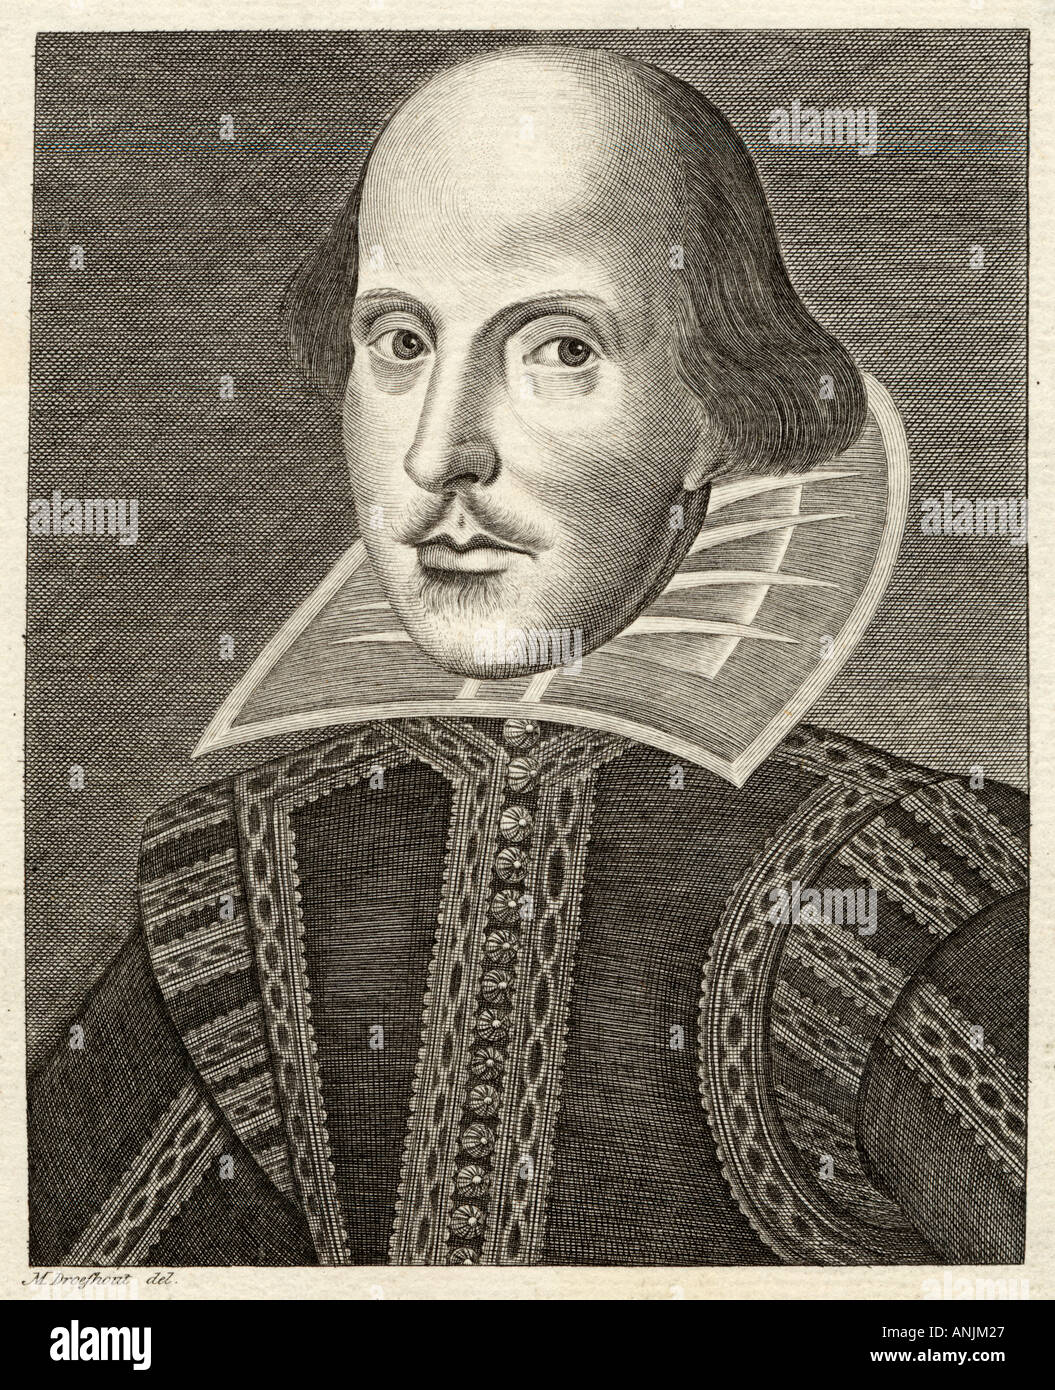 William Shakespeare Stock Photo